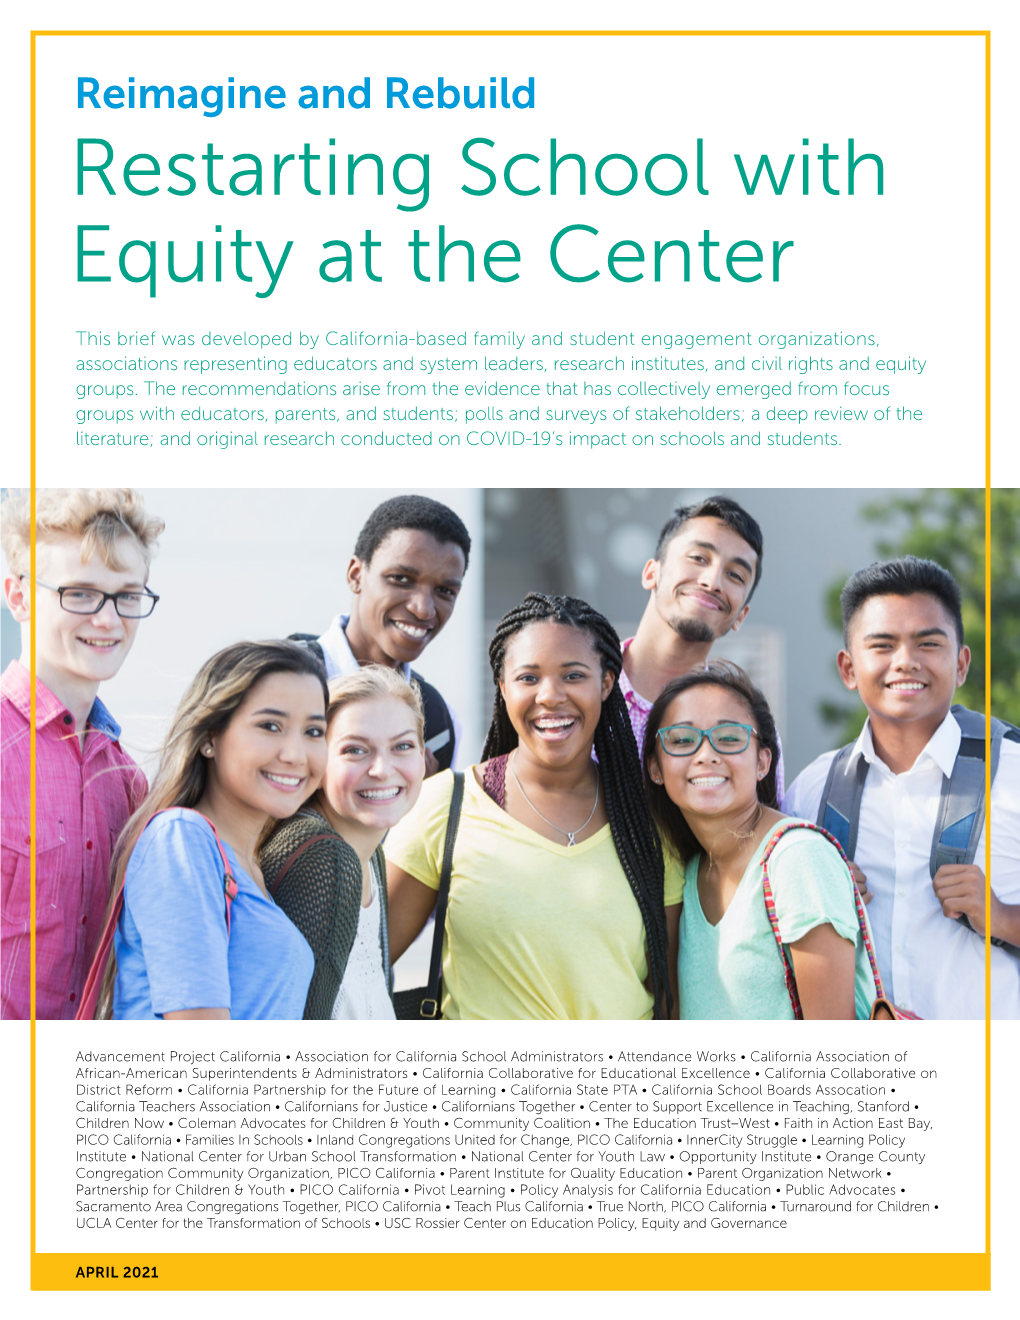 Reimagine and Rebuild: Restarting School with Equity at the Center the Big Idea: Restorative Restart